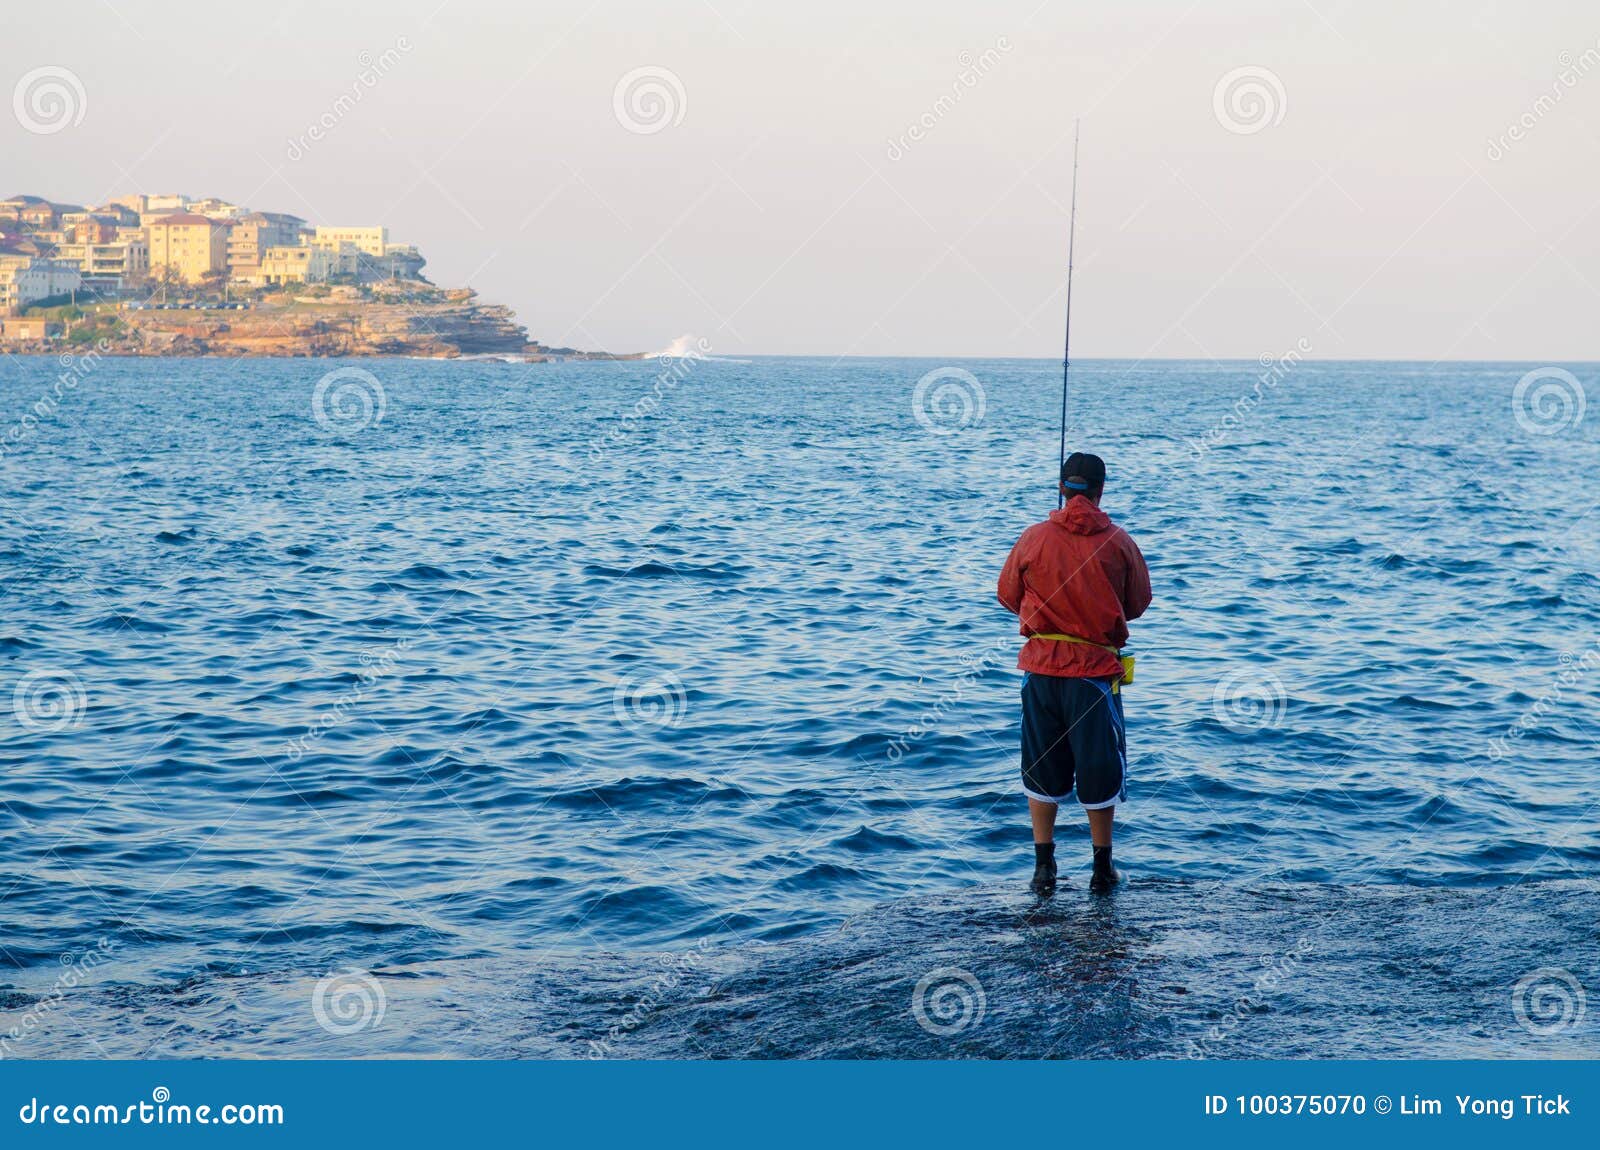 https://thumbs.dreamstime.com/z/fishing-beach-fisherman-red-rain-jacket-along-bondi-sydney-australia-100375070.jpg